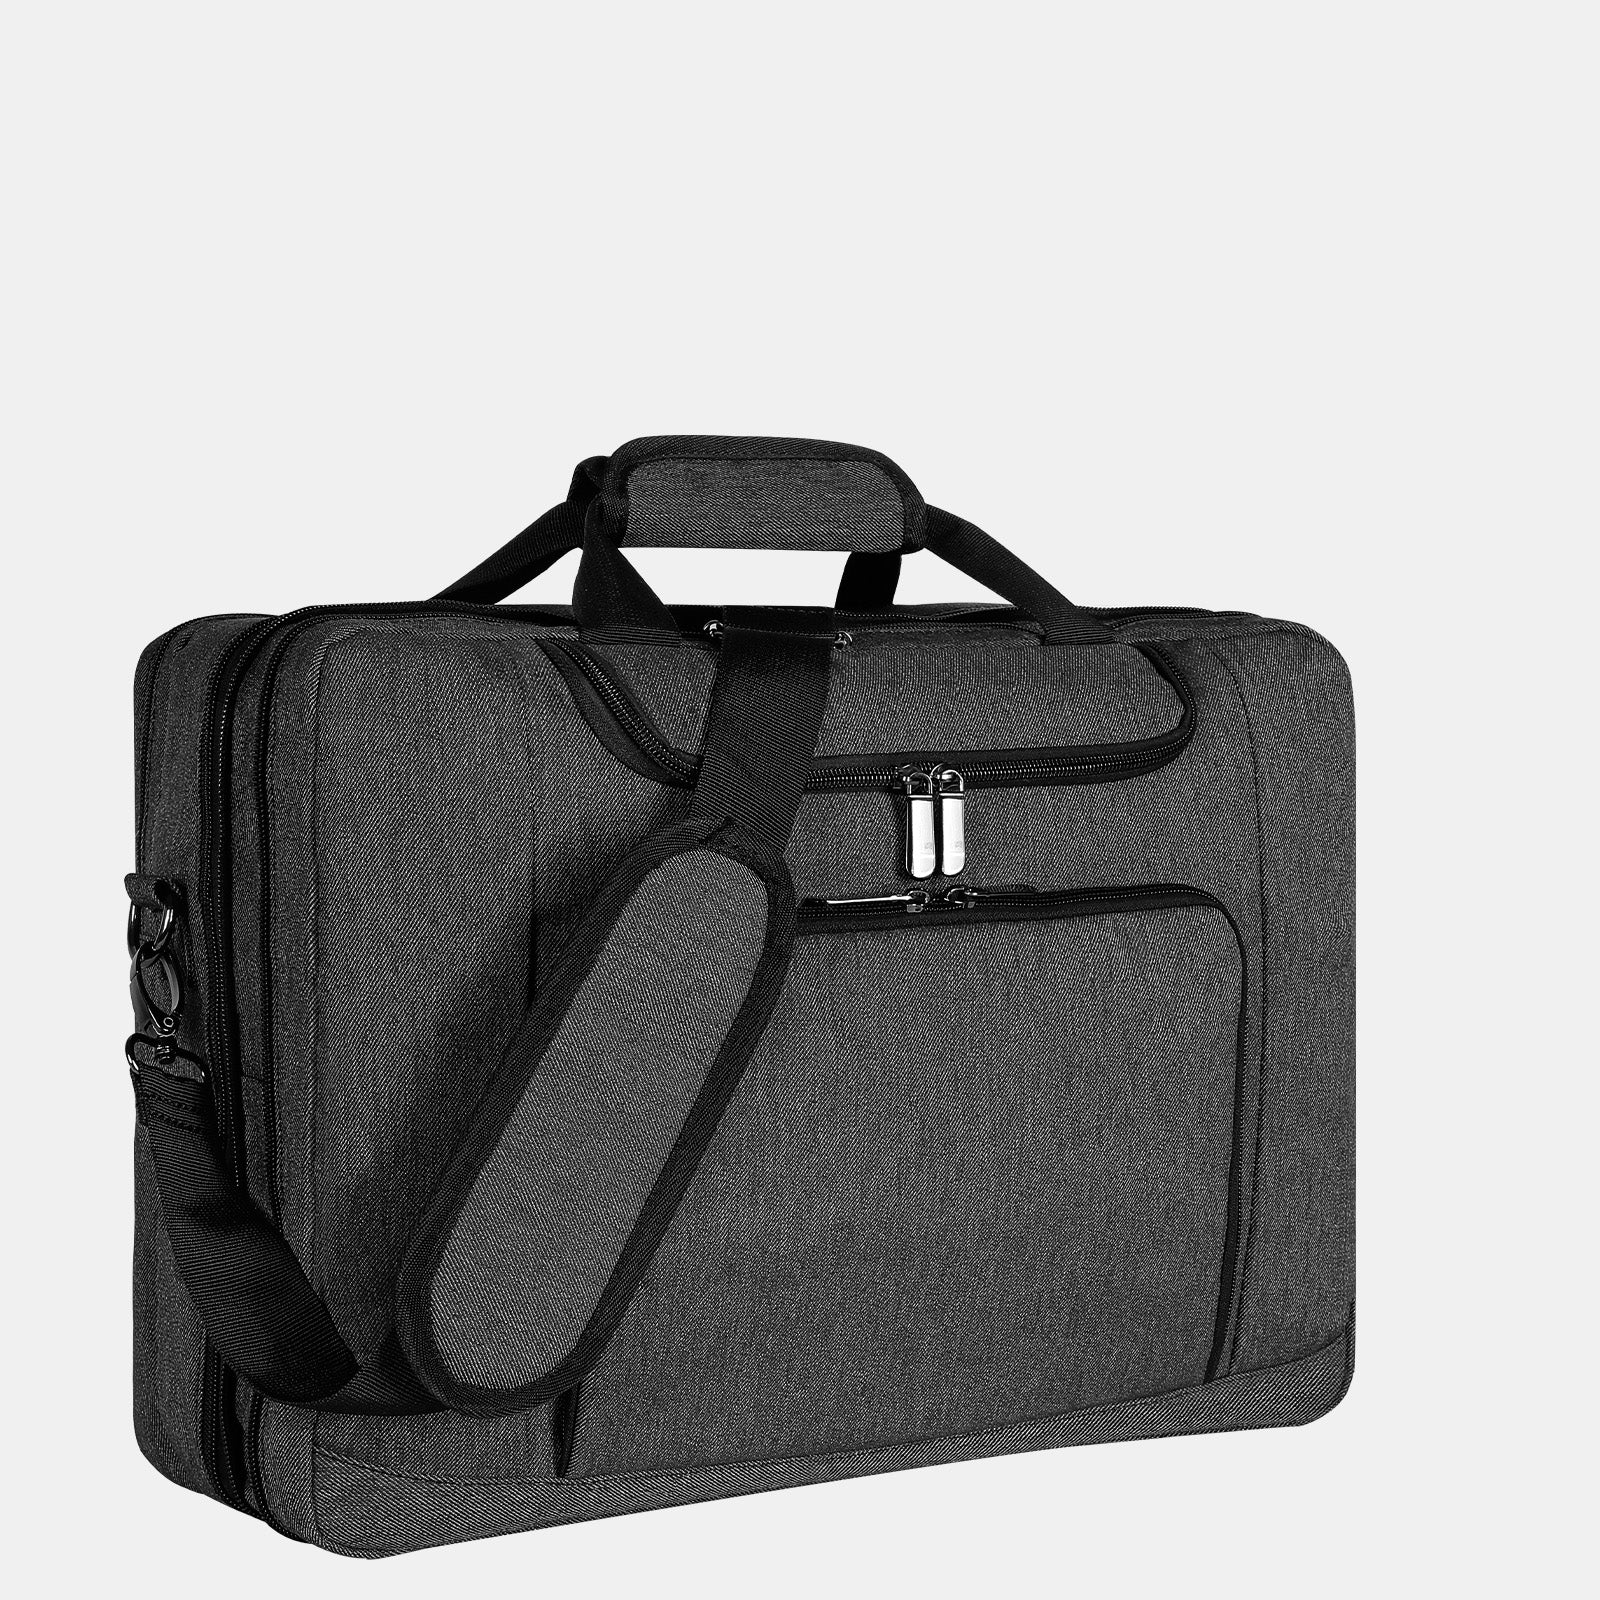 Bertasche Laptop Shoulder Bag for University/Work